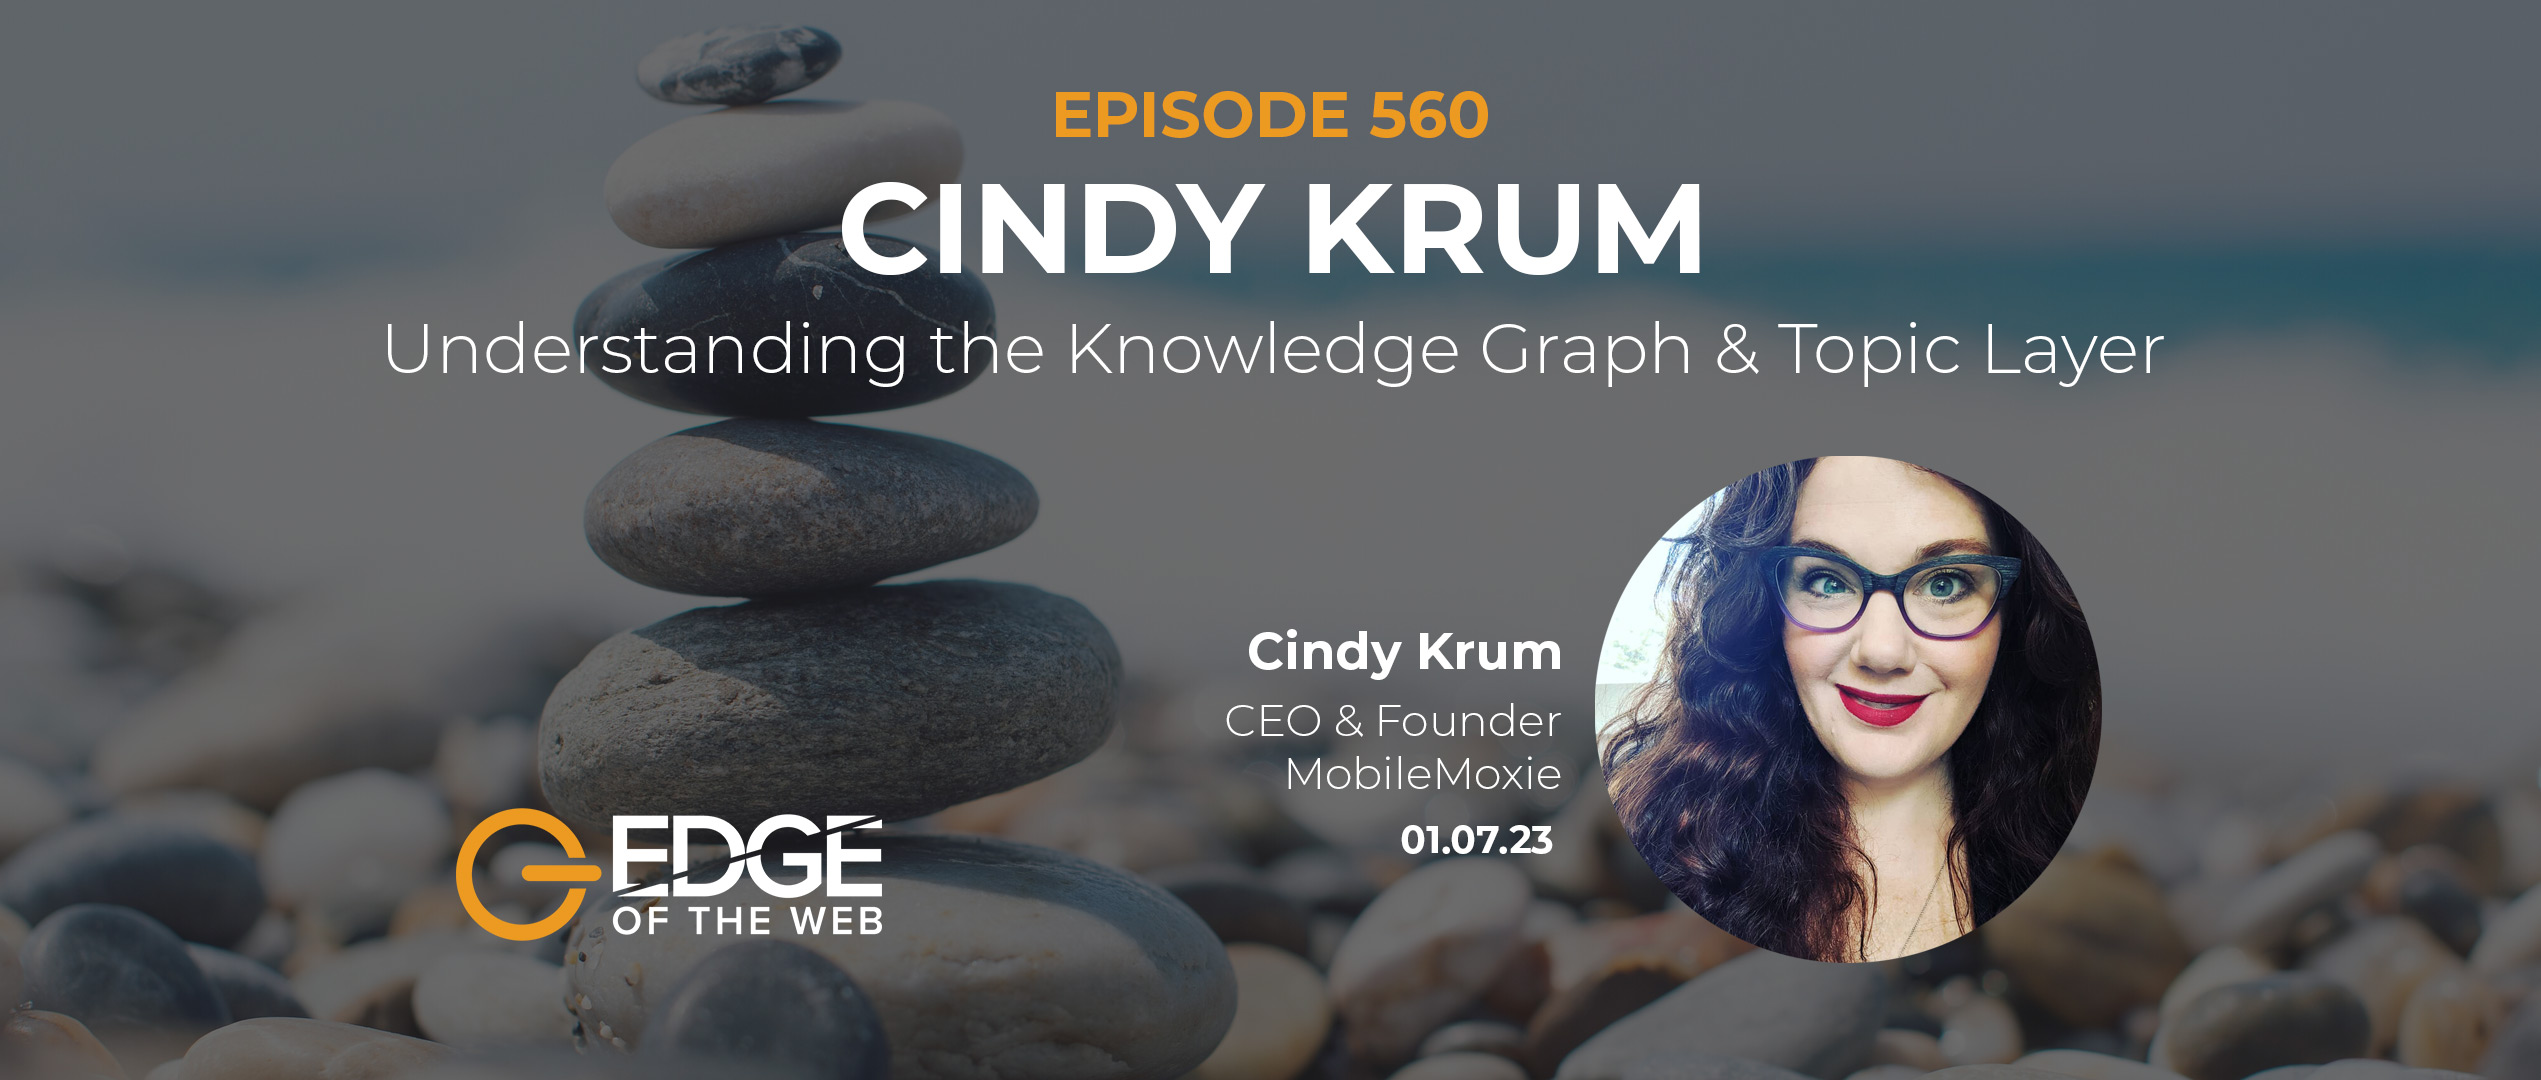 Cindy Krum EDGE Episode 560 Featured Image